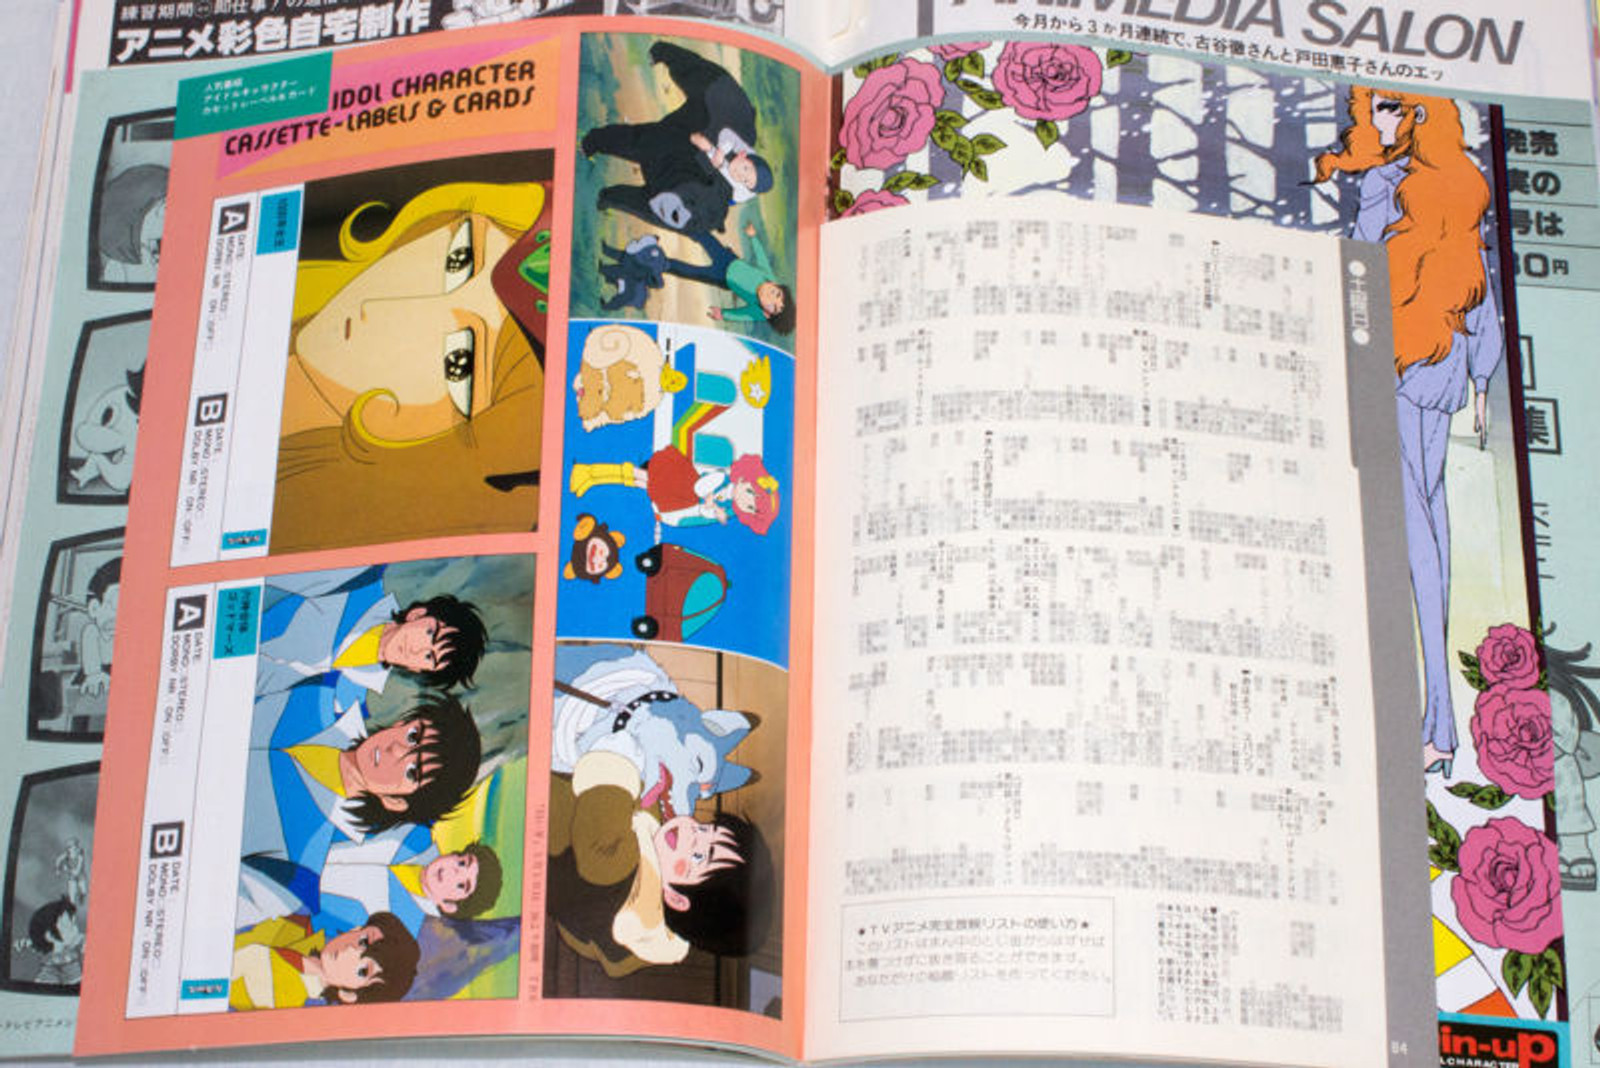 K-ON! Itsumademo: Capa do CD Unmei♪wa♪Endless;K-ON! nas revistas mais  populares de anime